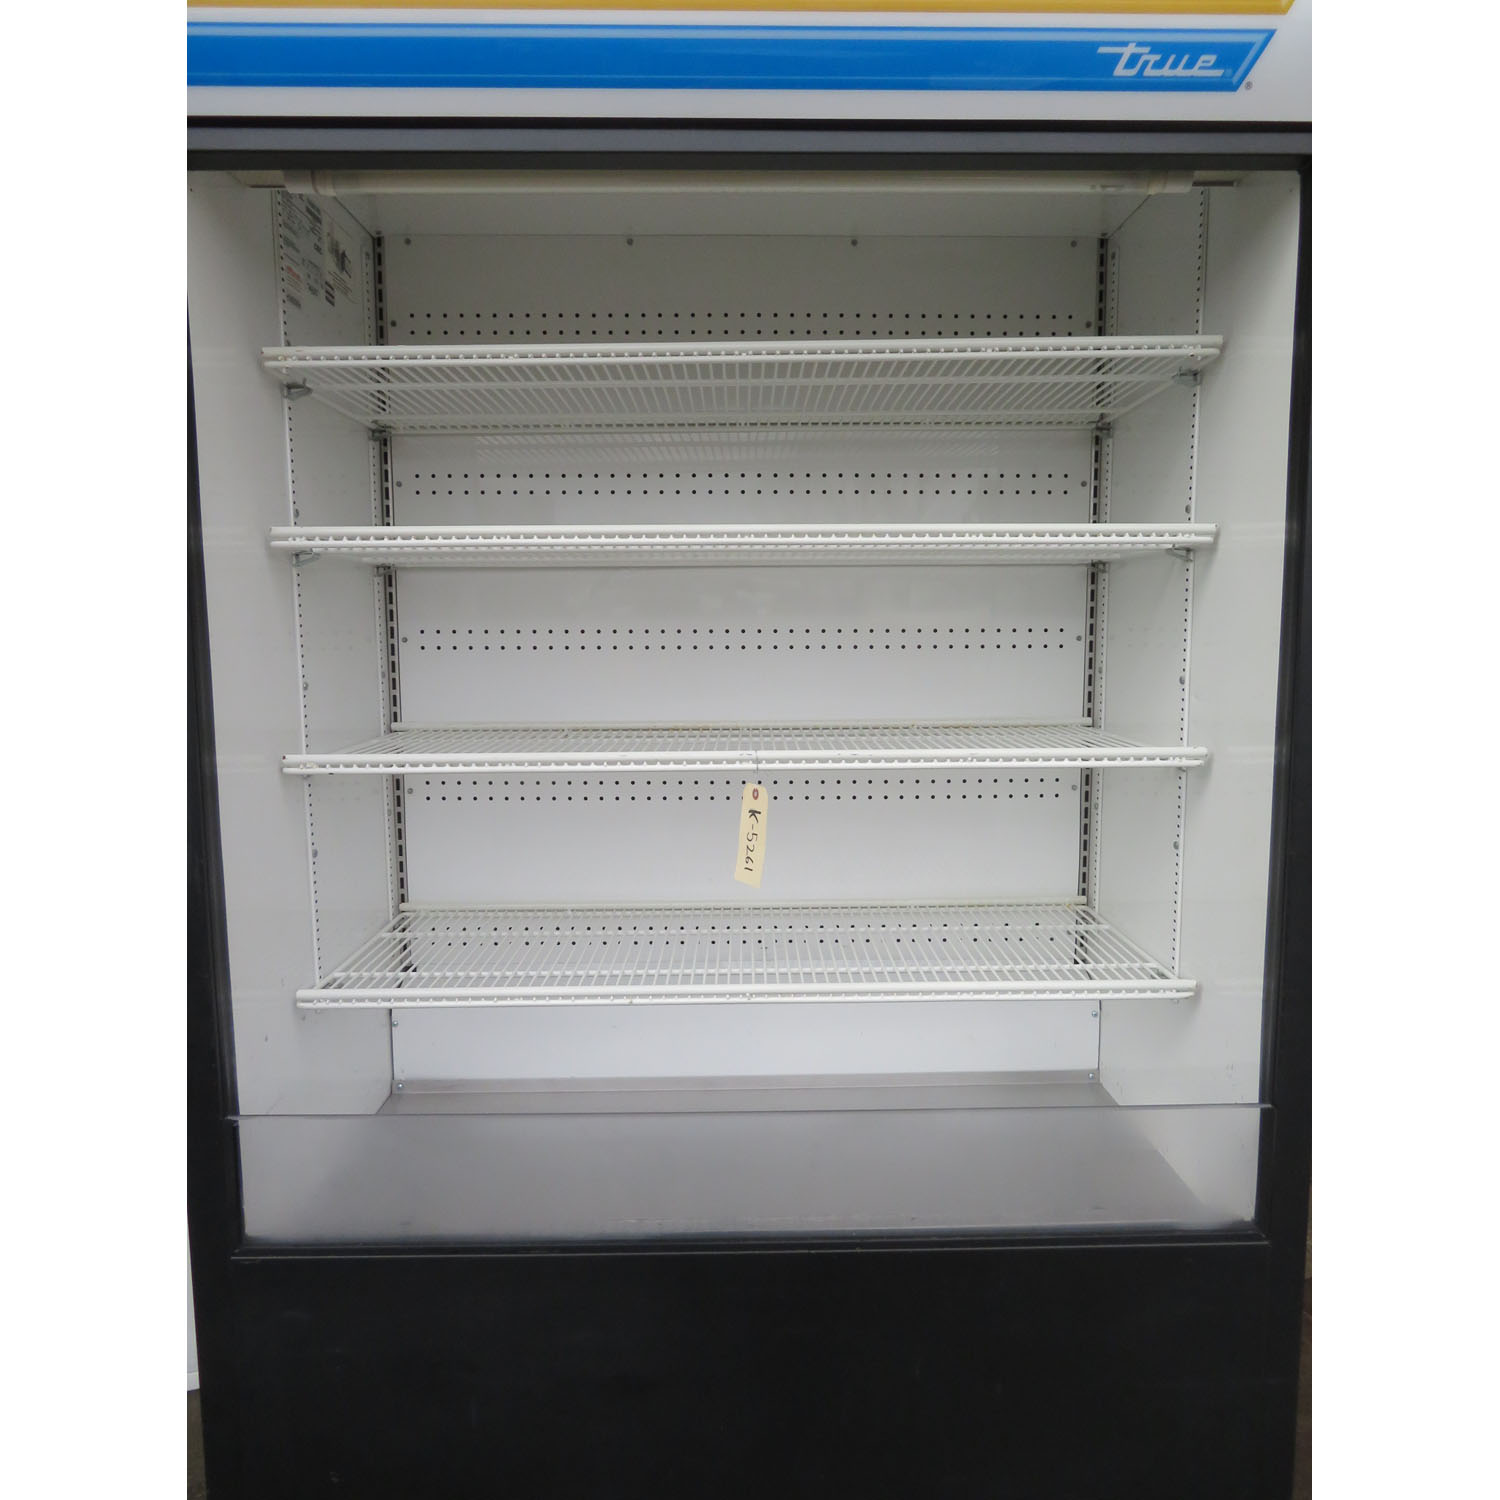 True TAC-48 Open Case Refrigerator Merchandiser 48" , Used Great Condition image 1